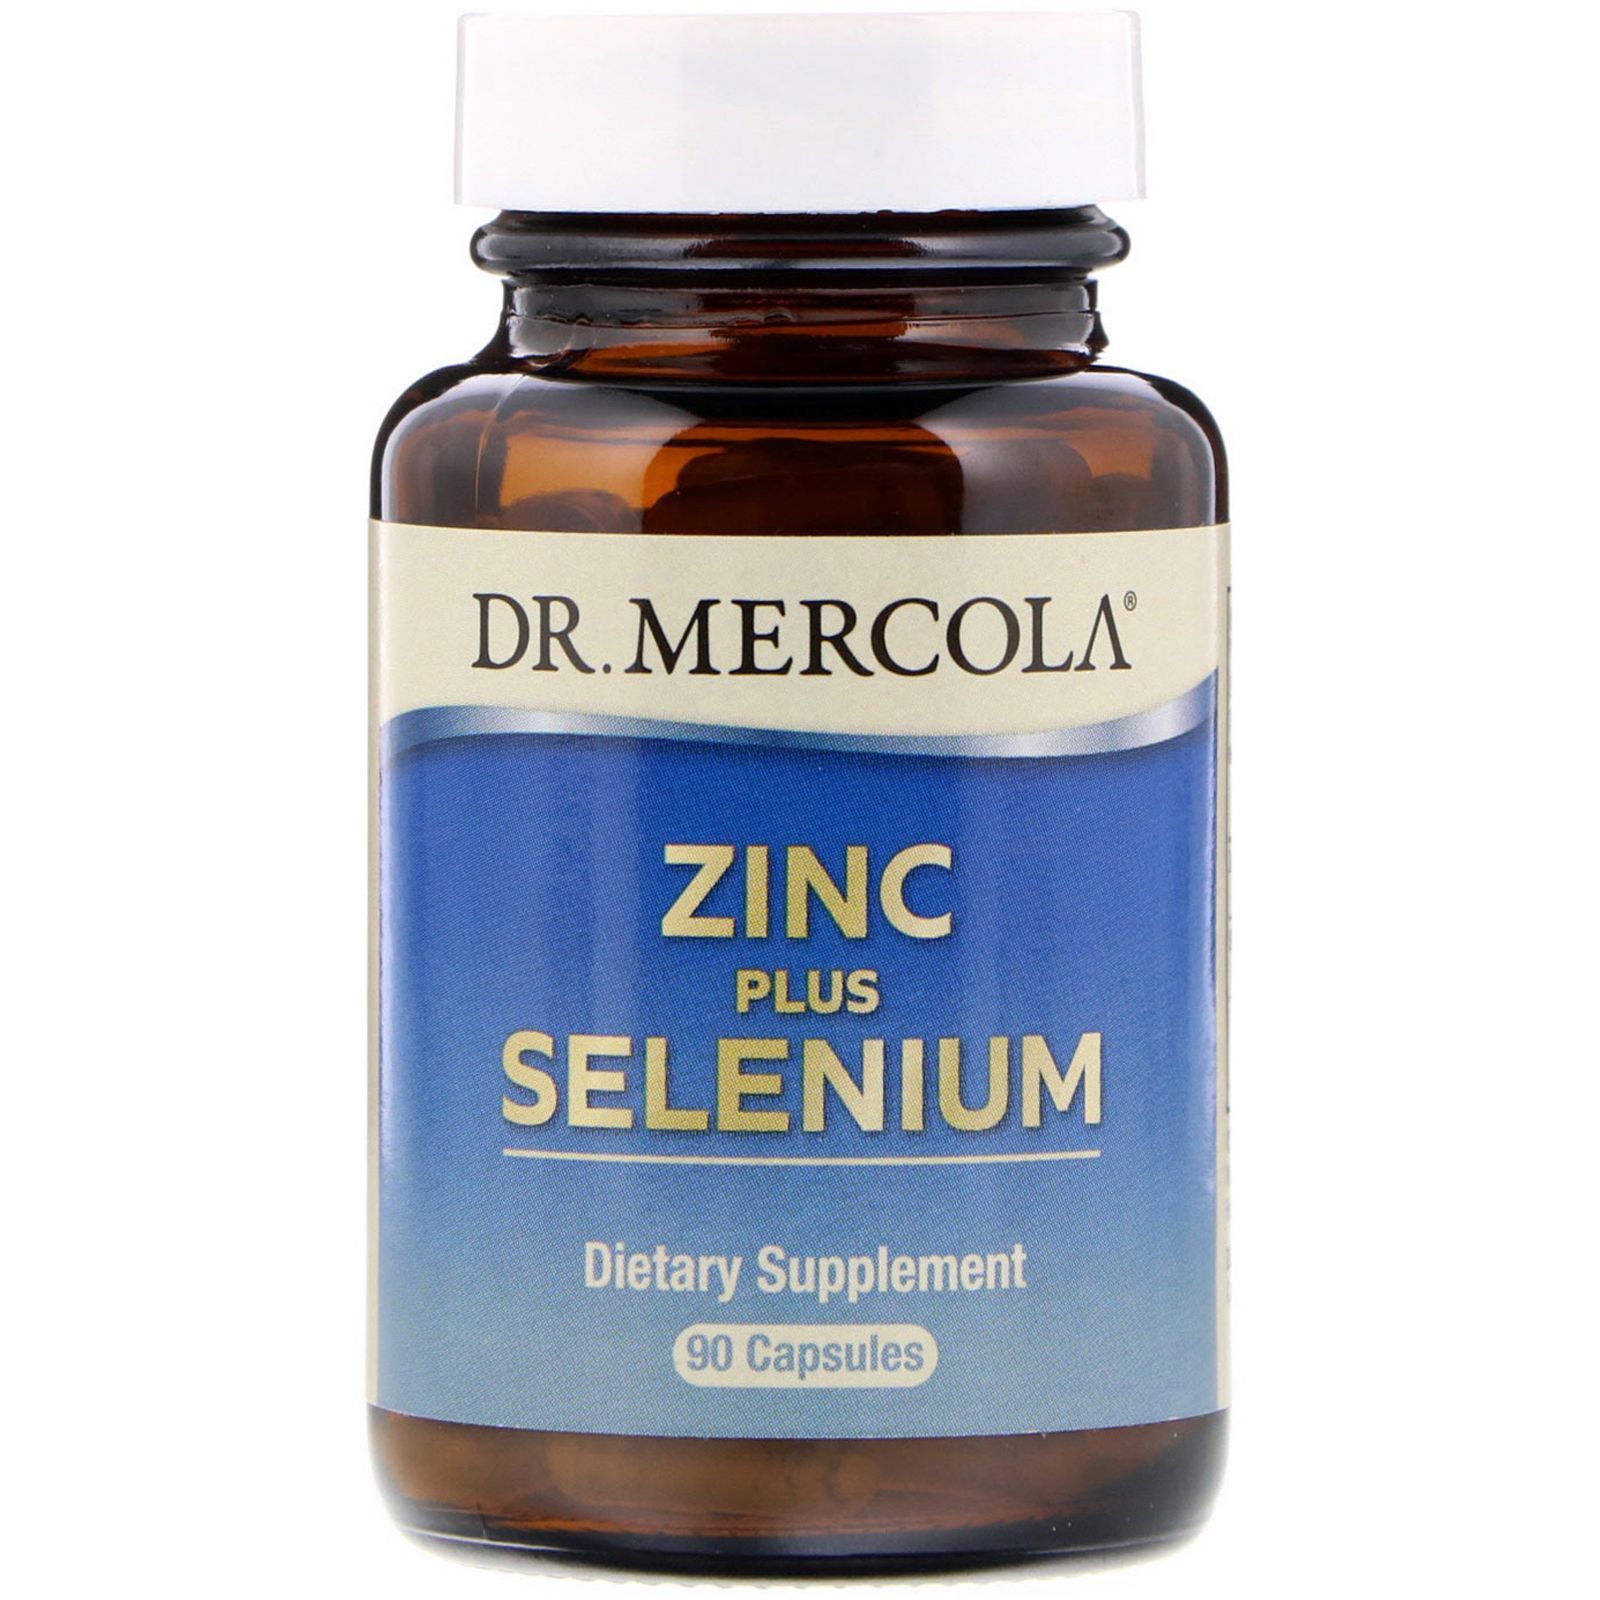 Цинк селен аптека. Dr Mercola Zinc Plus Selenium. Zinc селениум витамины. Капсулы селениум плюс цинк. Цинк и селен от доктора Меркола.